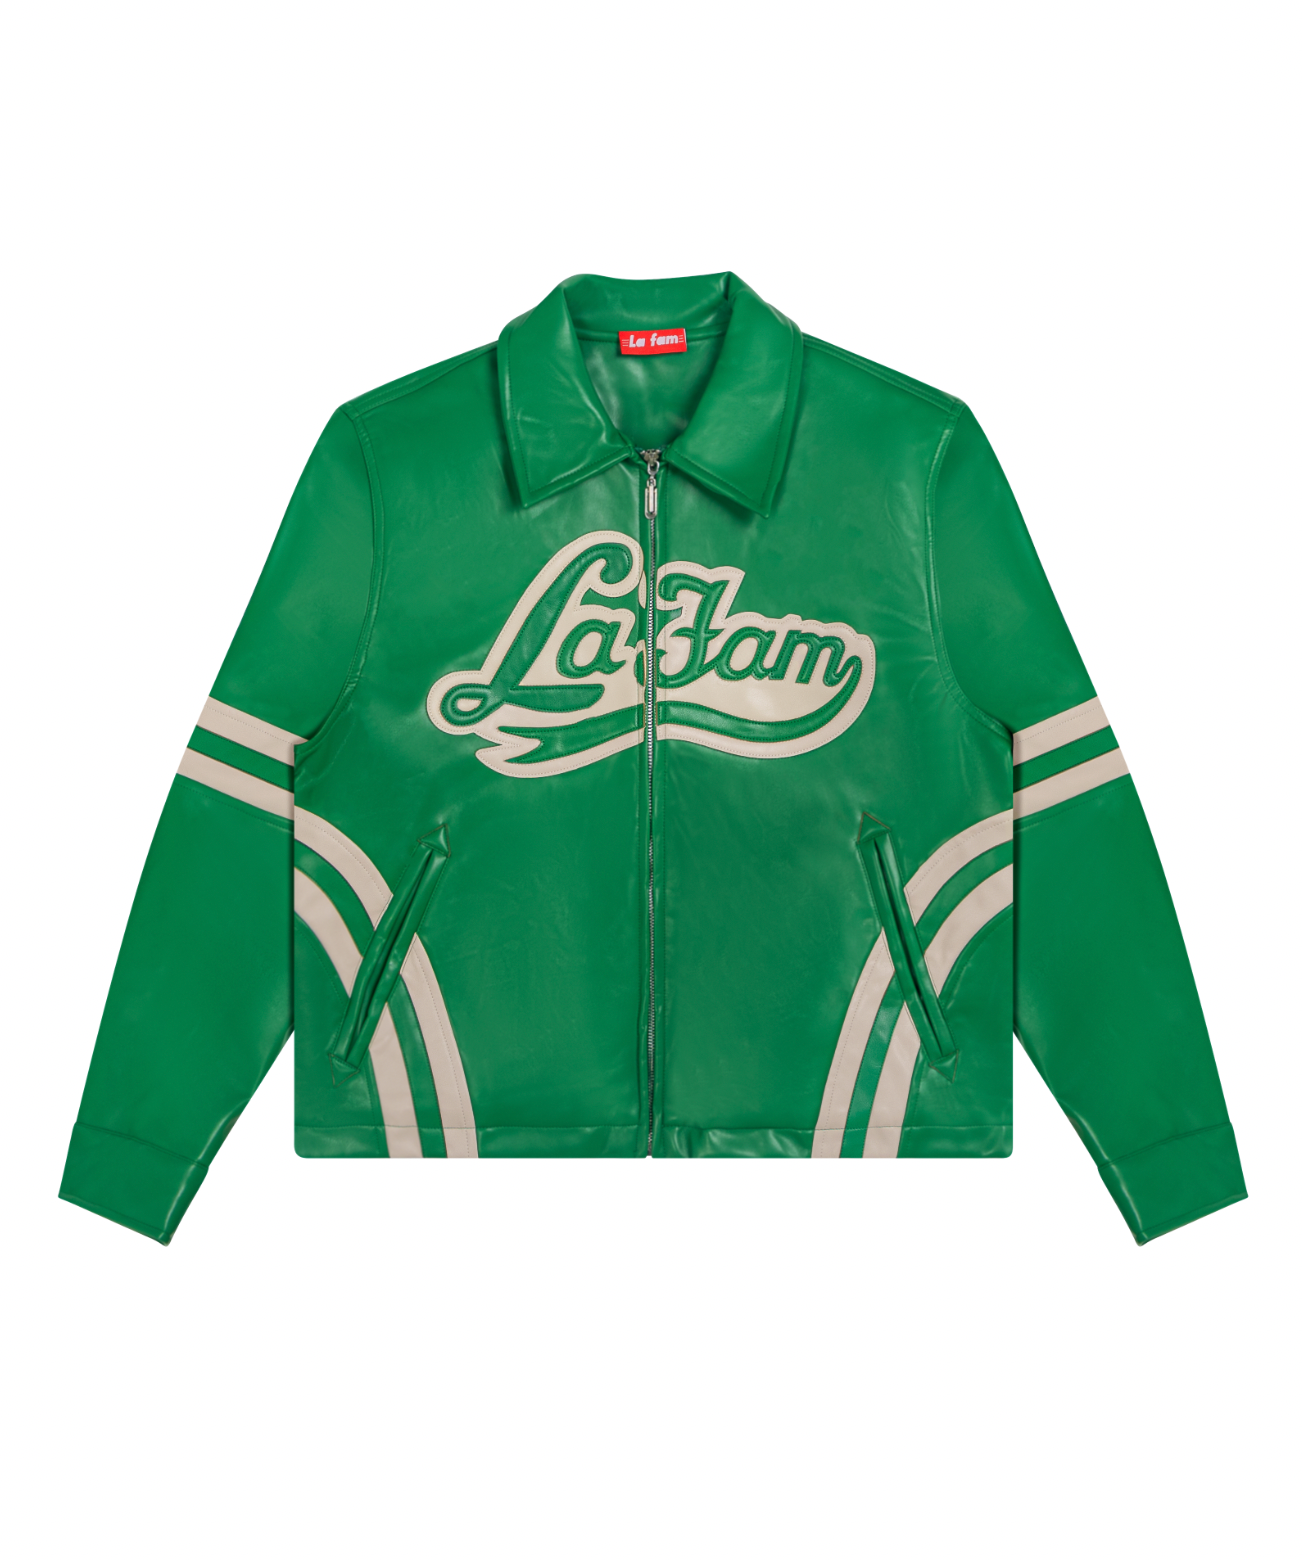 Green retro leather jacket